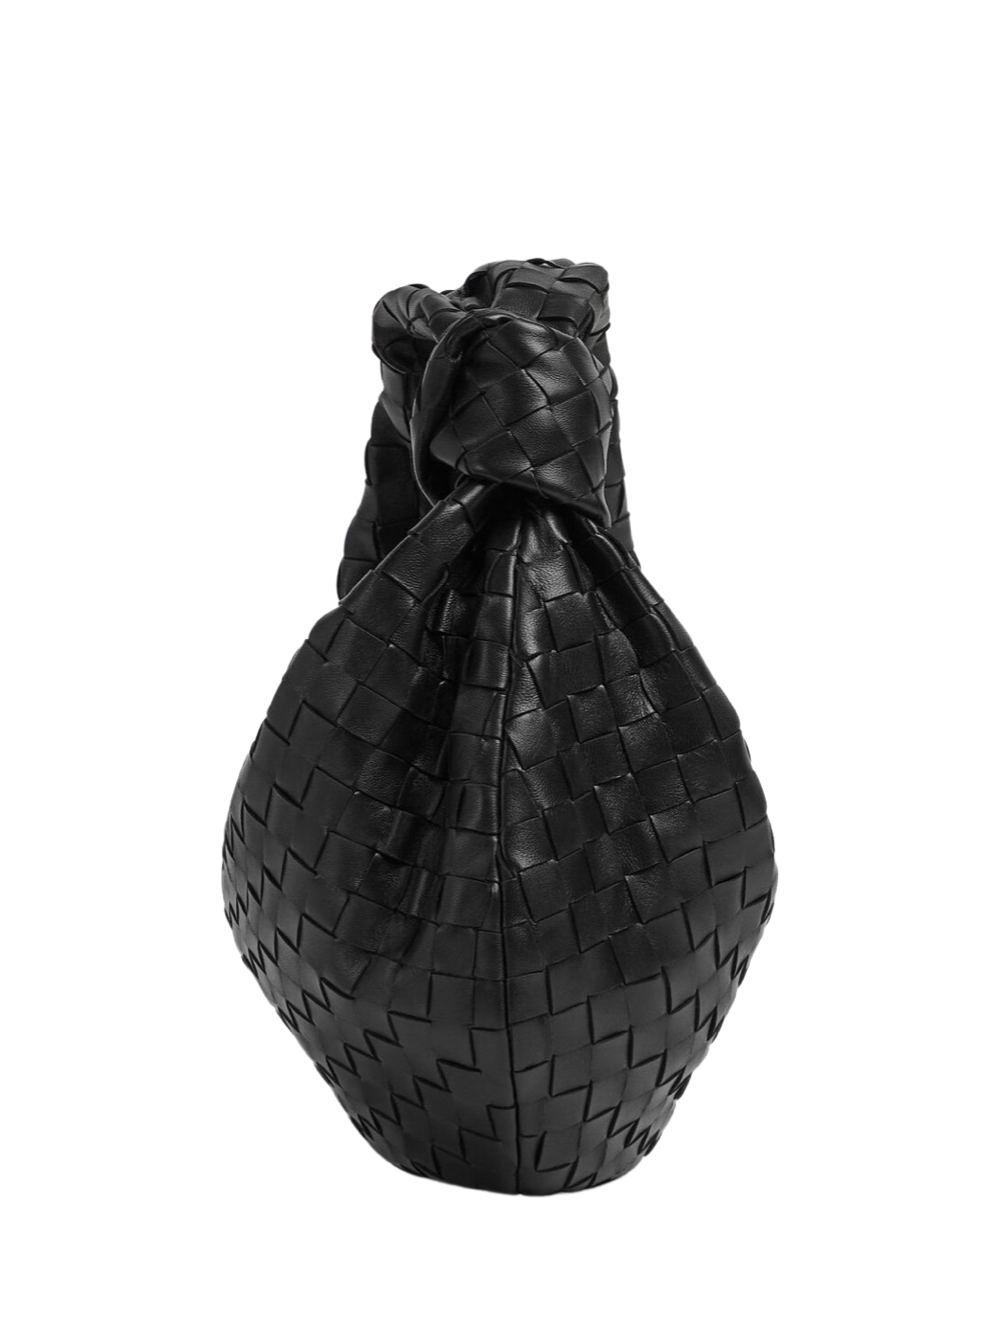 The Bottega Veneta Jodie Bag: Styles, Sizes & Colors - Academy by